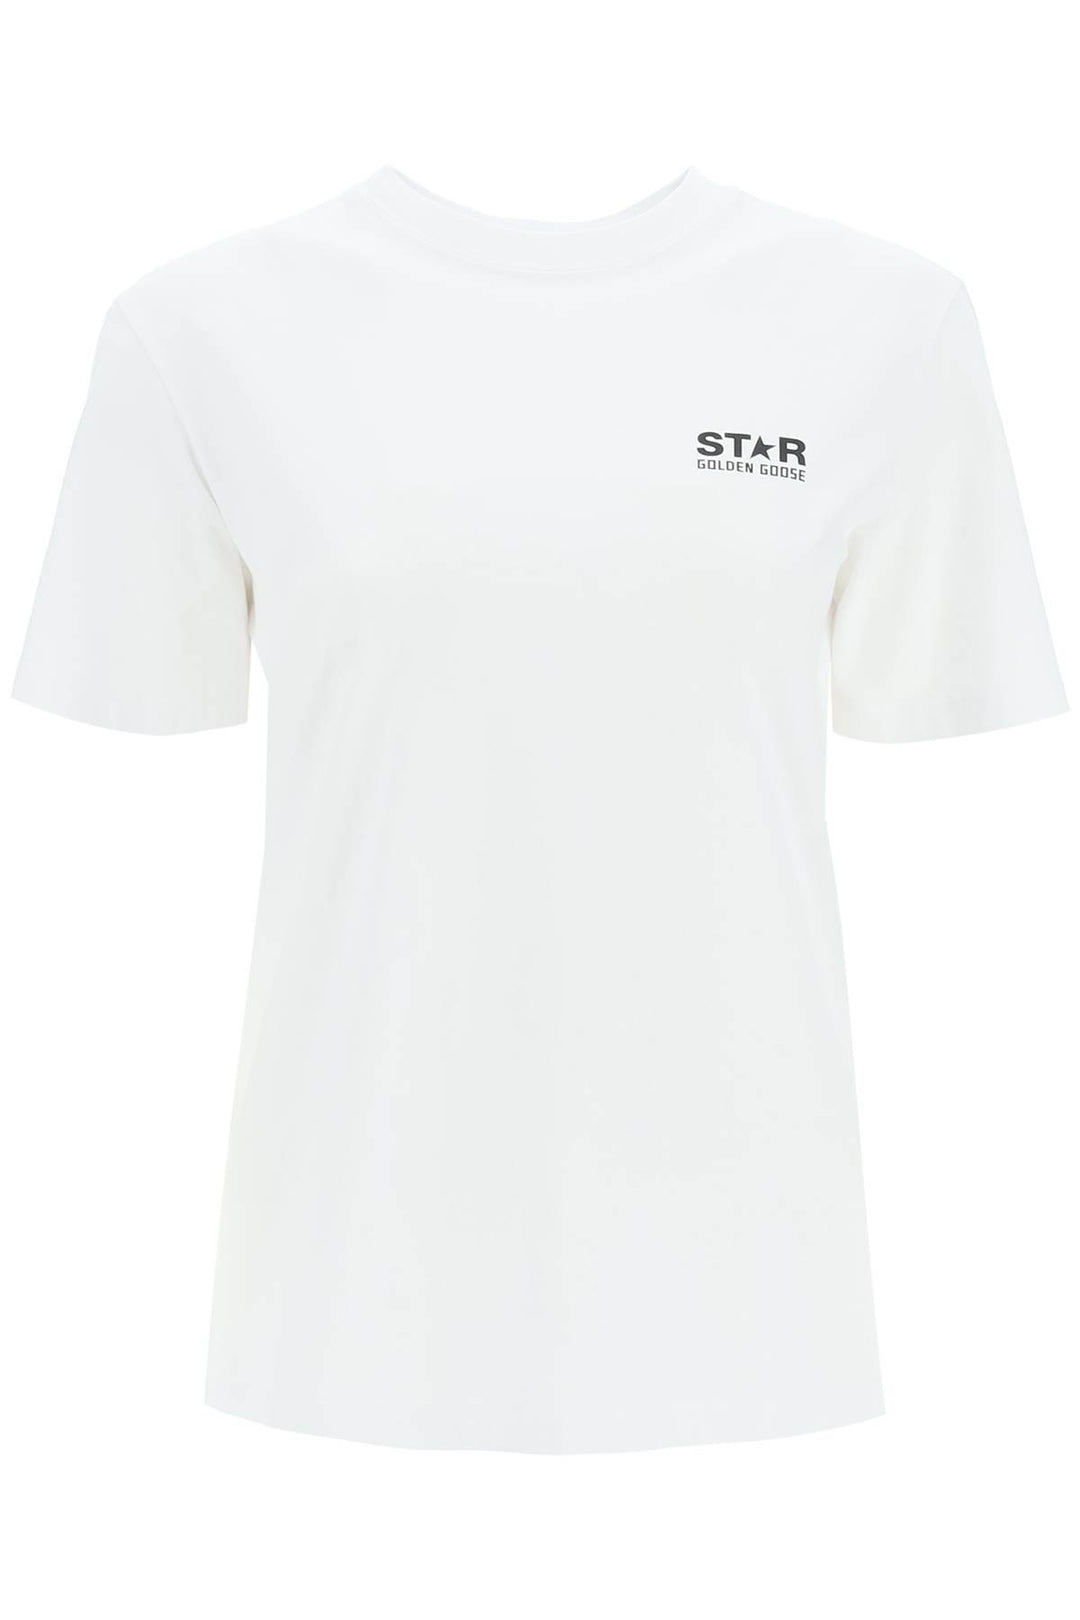 Golden Goose Big Star T Shirt   Bianco